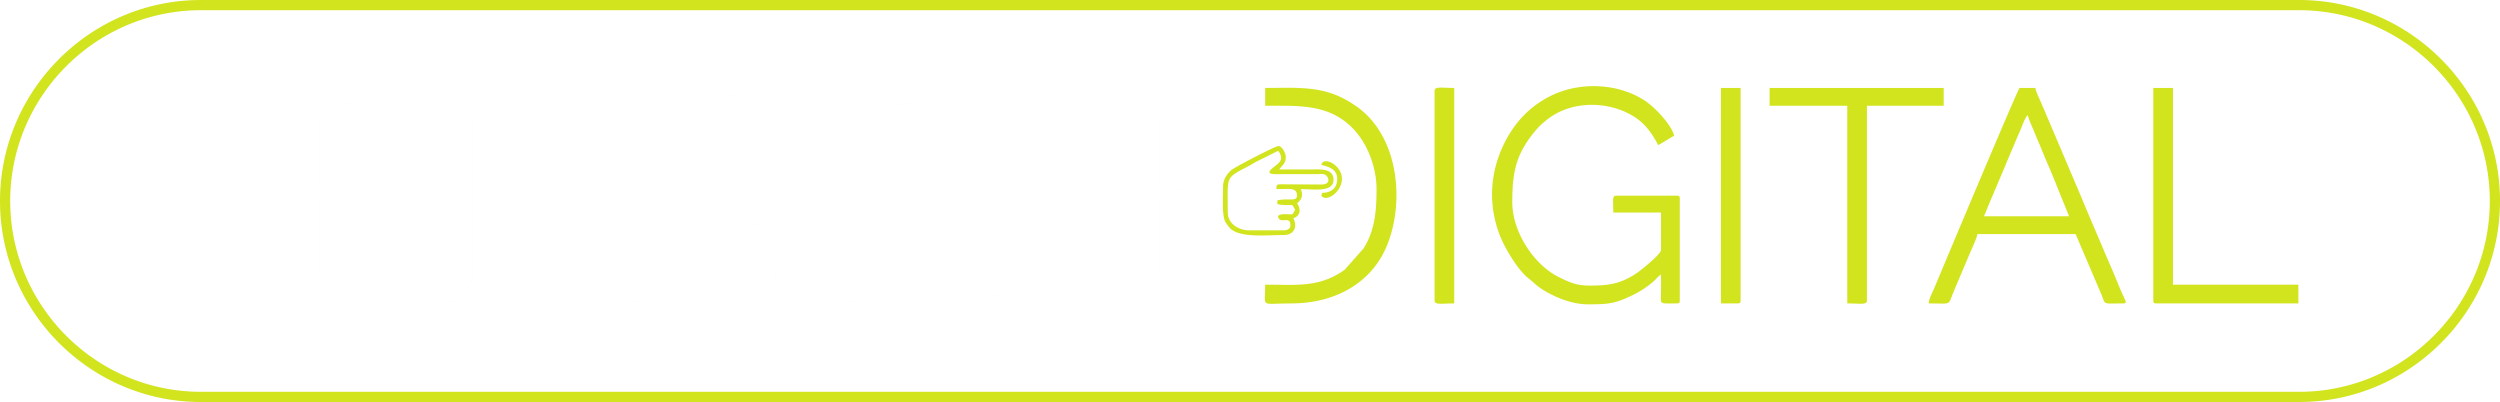 Elate Digital logo